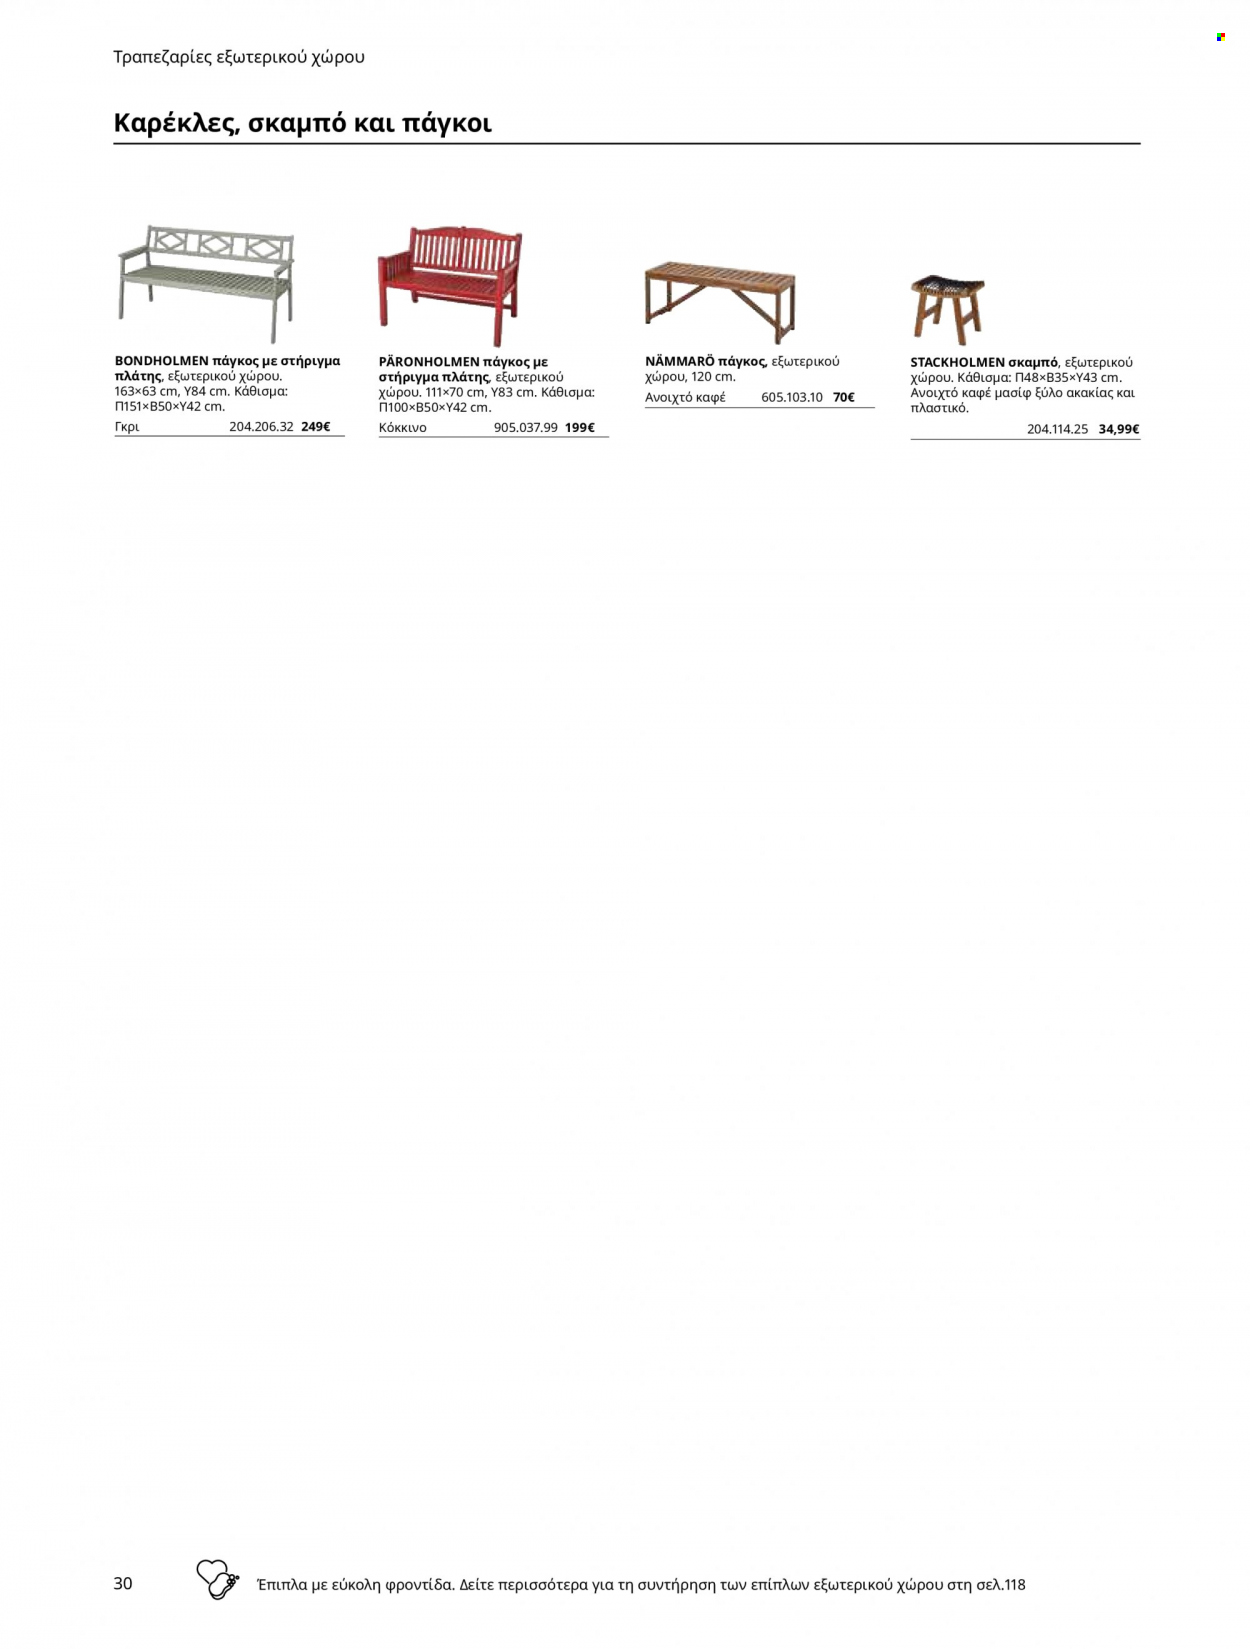 thumbnail - Φυλλάδια IKEA - Εκπτωτικά προϊόντα - πάγκος, καρέκλα, σκαμπο, πάγκοι. Σελίδα 30.